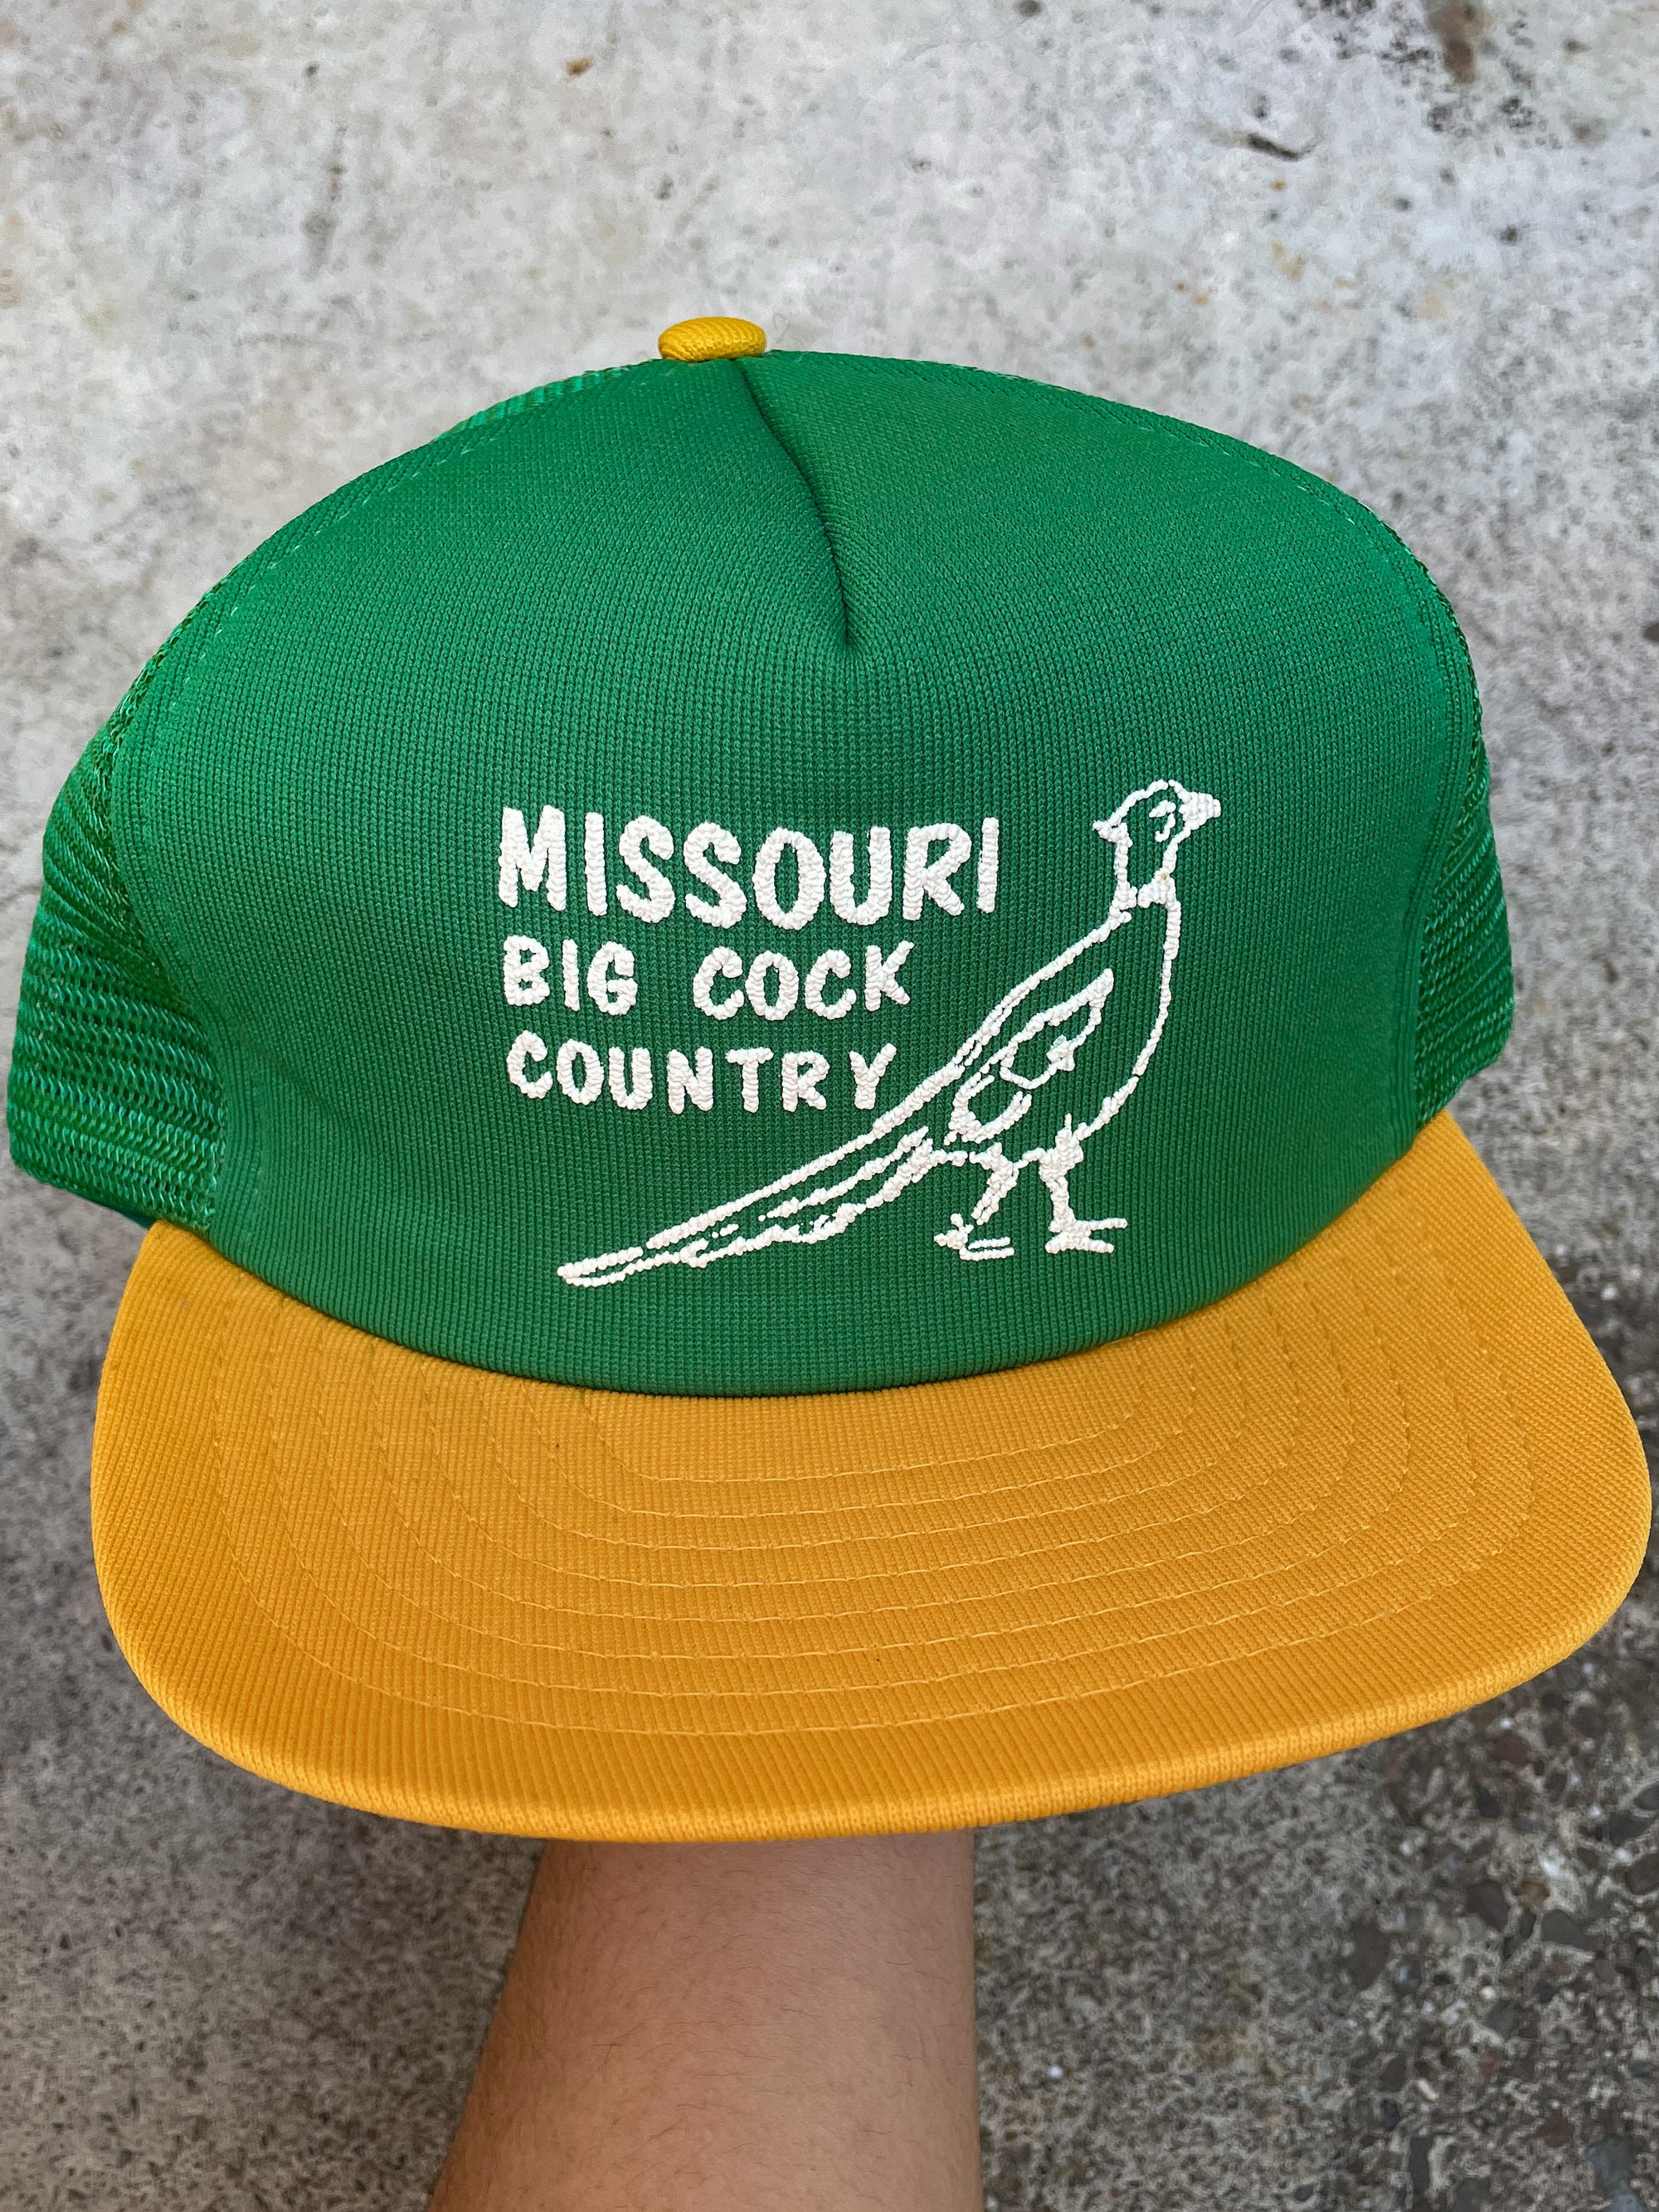 1980s/90s “Missouri Big Cock Country” Trucker Hat